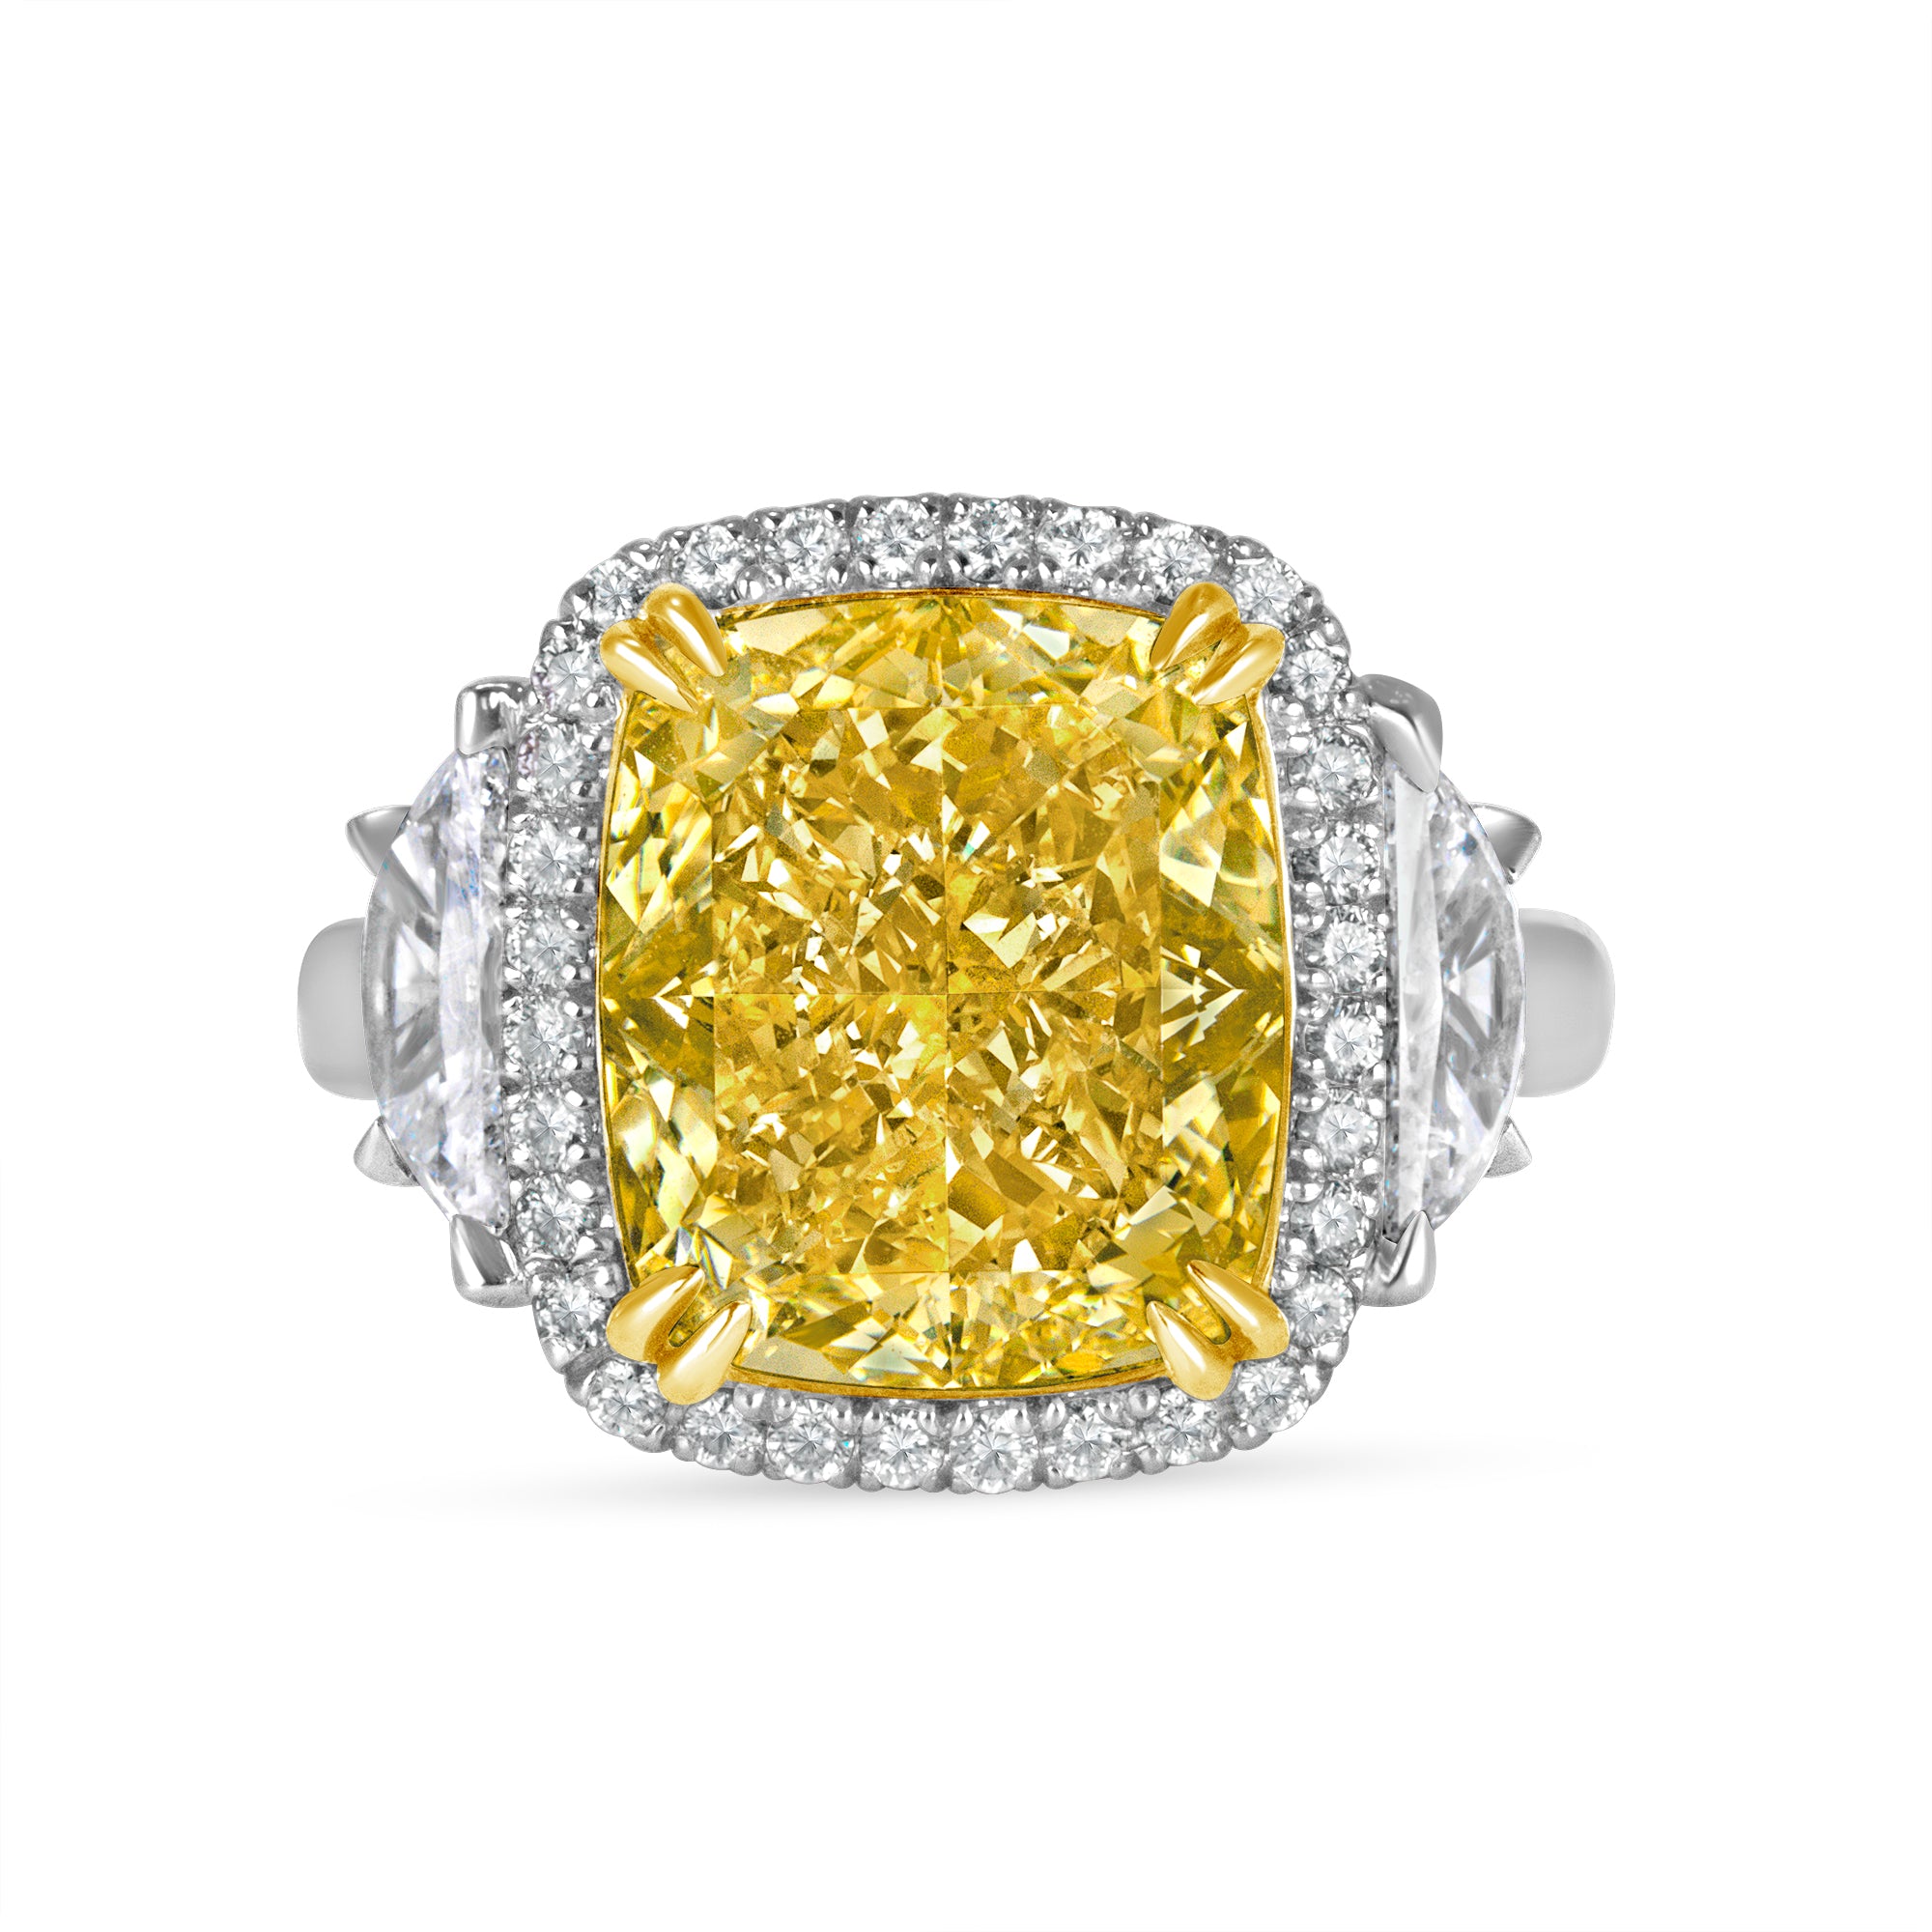 Cushion Cut Fancy Intense Yellow Diamond and Pavé Diamond Ring in 18 Karat Yellow Gold and Platinum